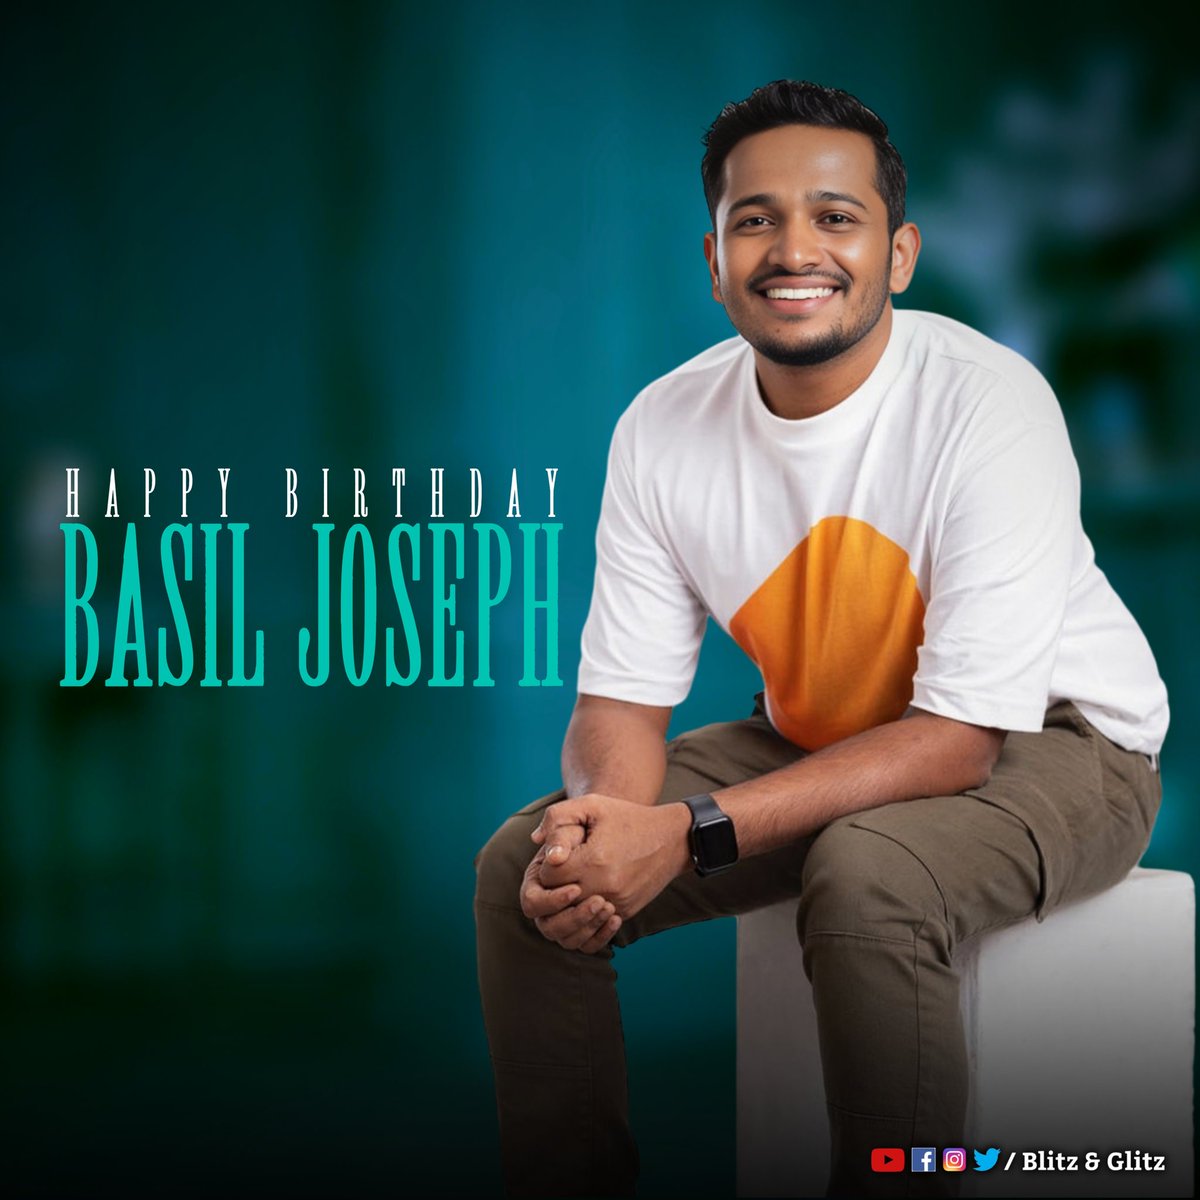 Team @Blitz__Glitz wishing the talented film maker @basiljoseph25 a very happy birthday.🎂⚡
#HBDBasilJoseph #HappyBirthdayBasilJoseph #basiljoseph